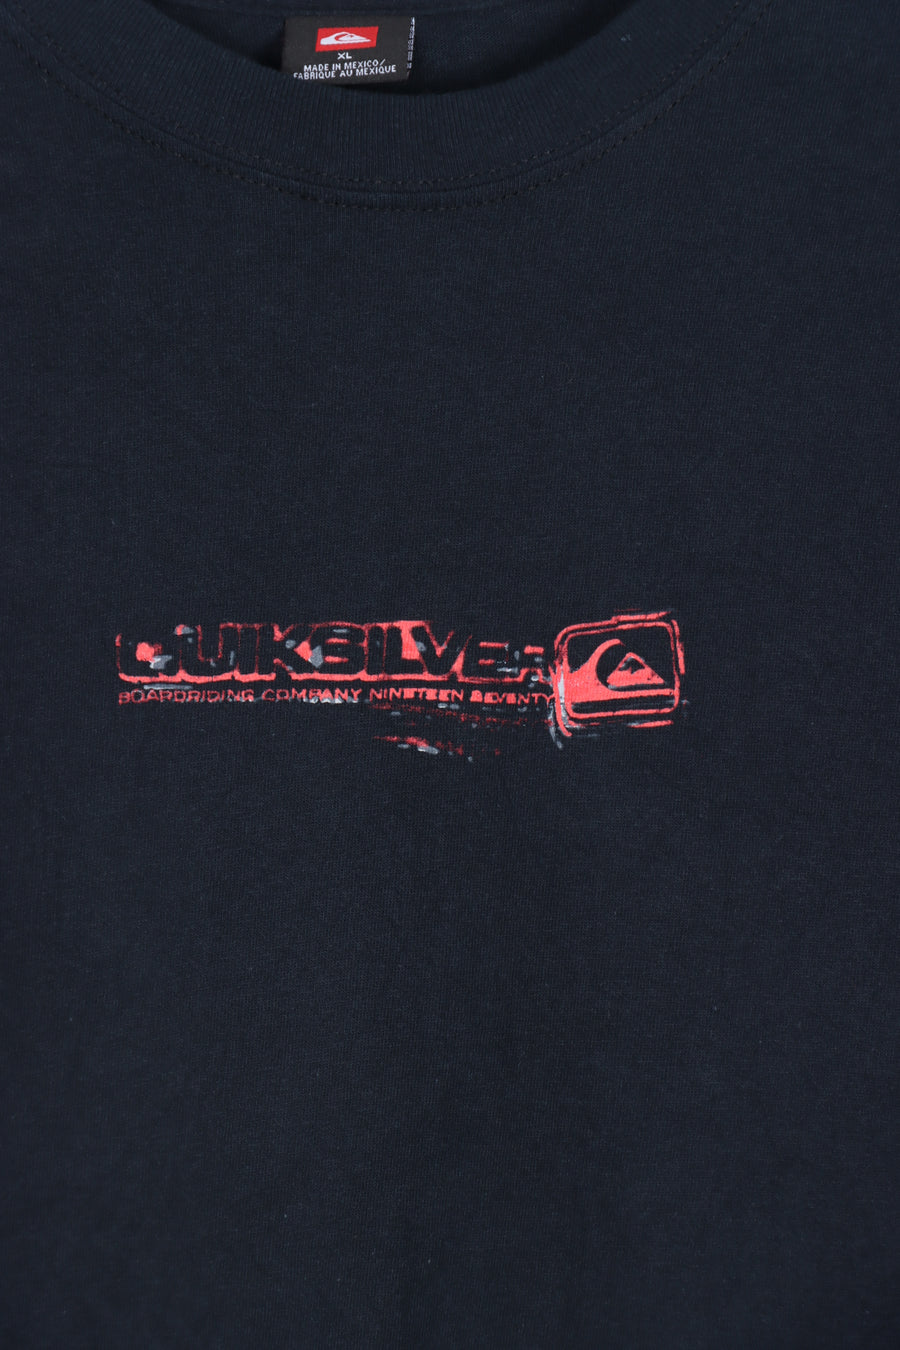 QUIKSILVER Black & Red Logo Surf Skate Front & Back Tee (XL)